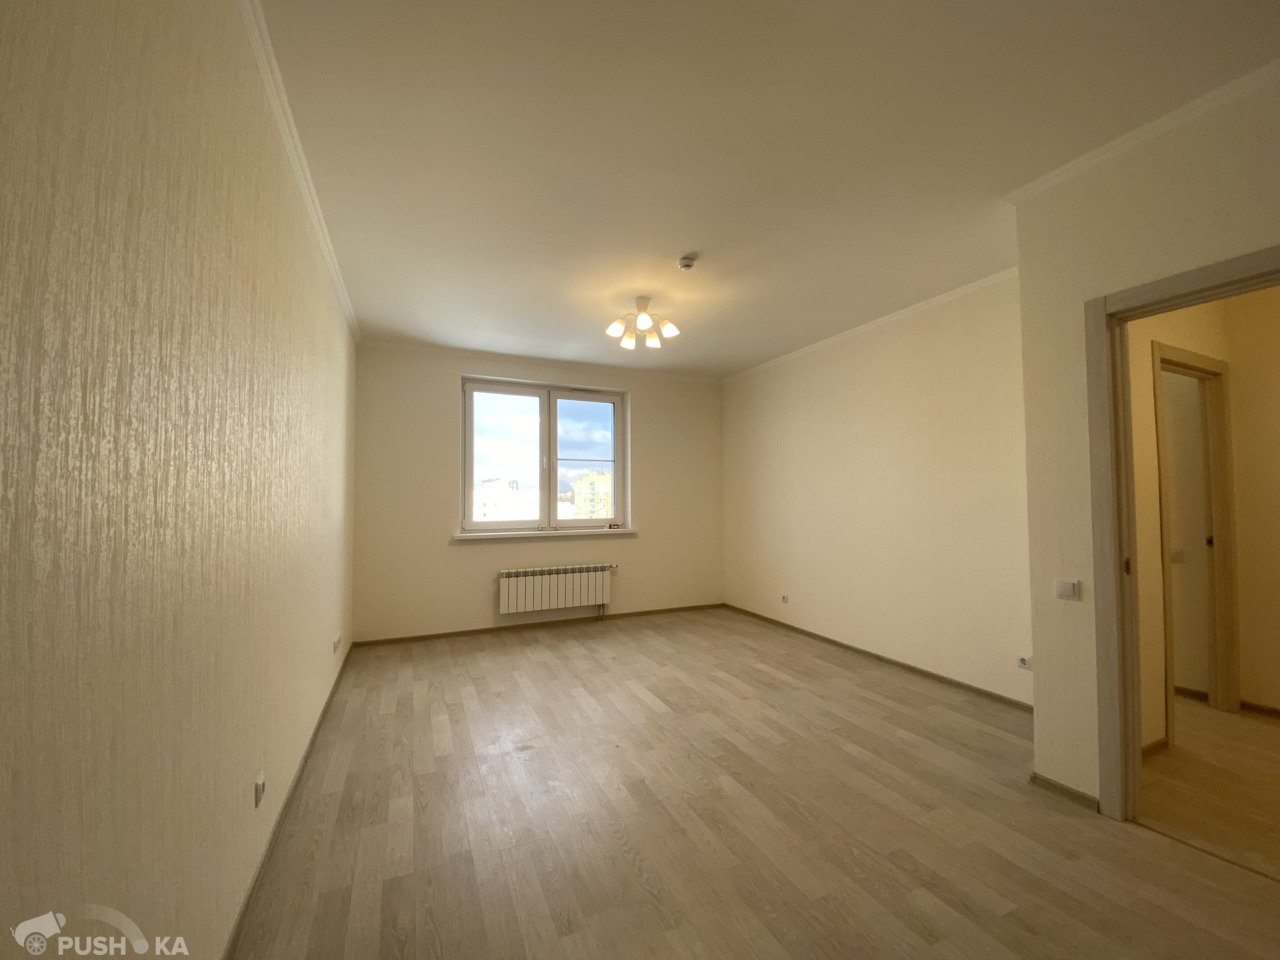 Продаётся 1-комнатная квартира 42.0 кв.м. этаж 15/20 за 14 800 000 руб 